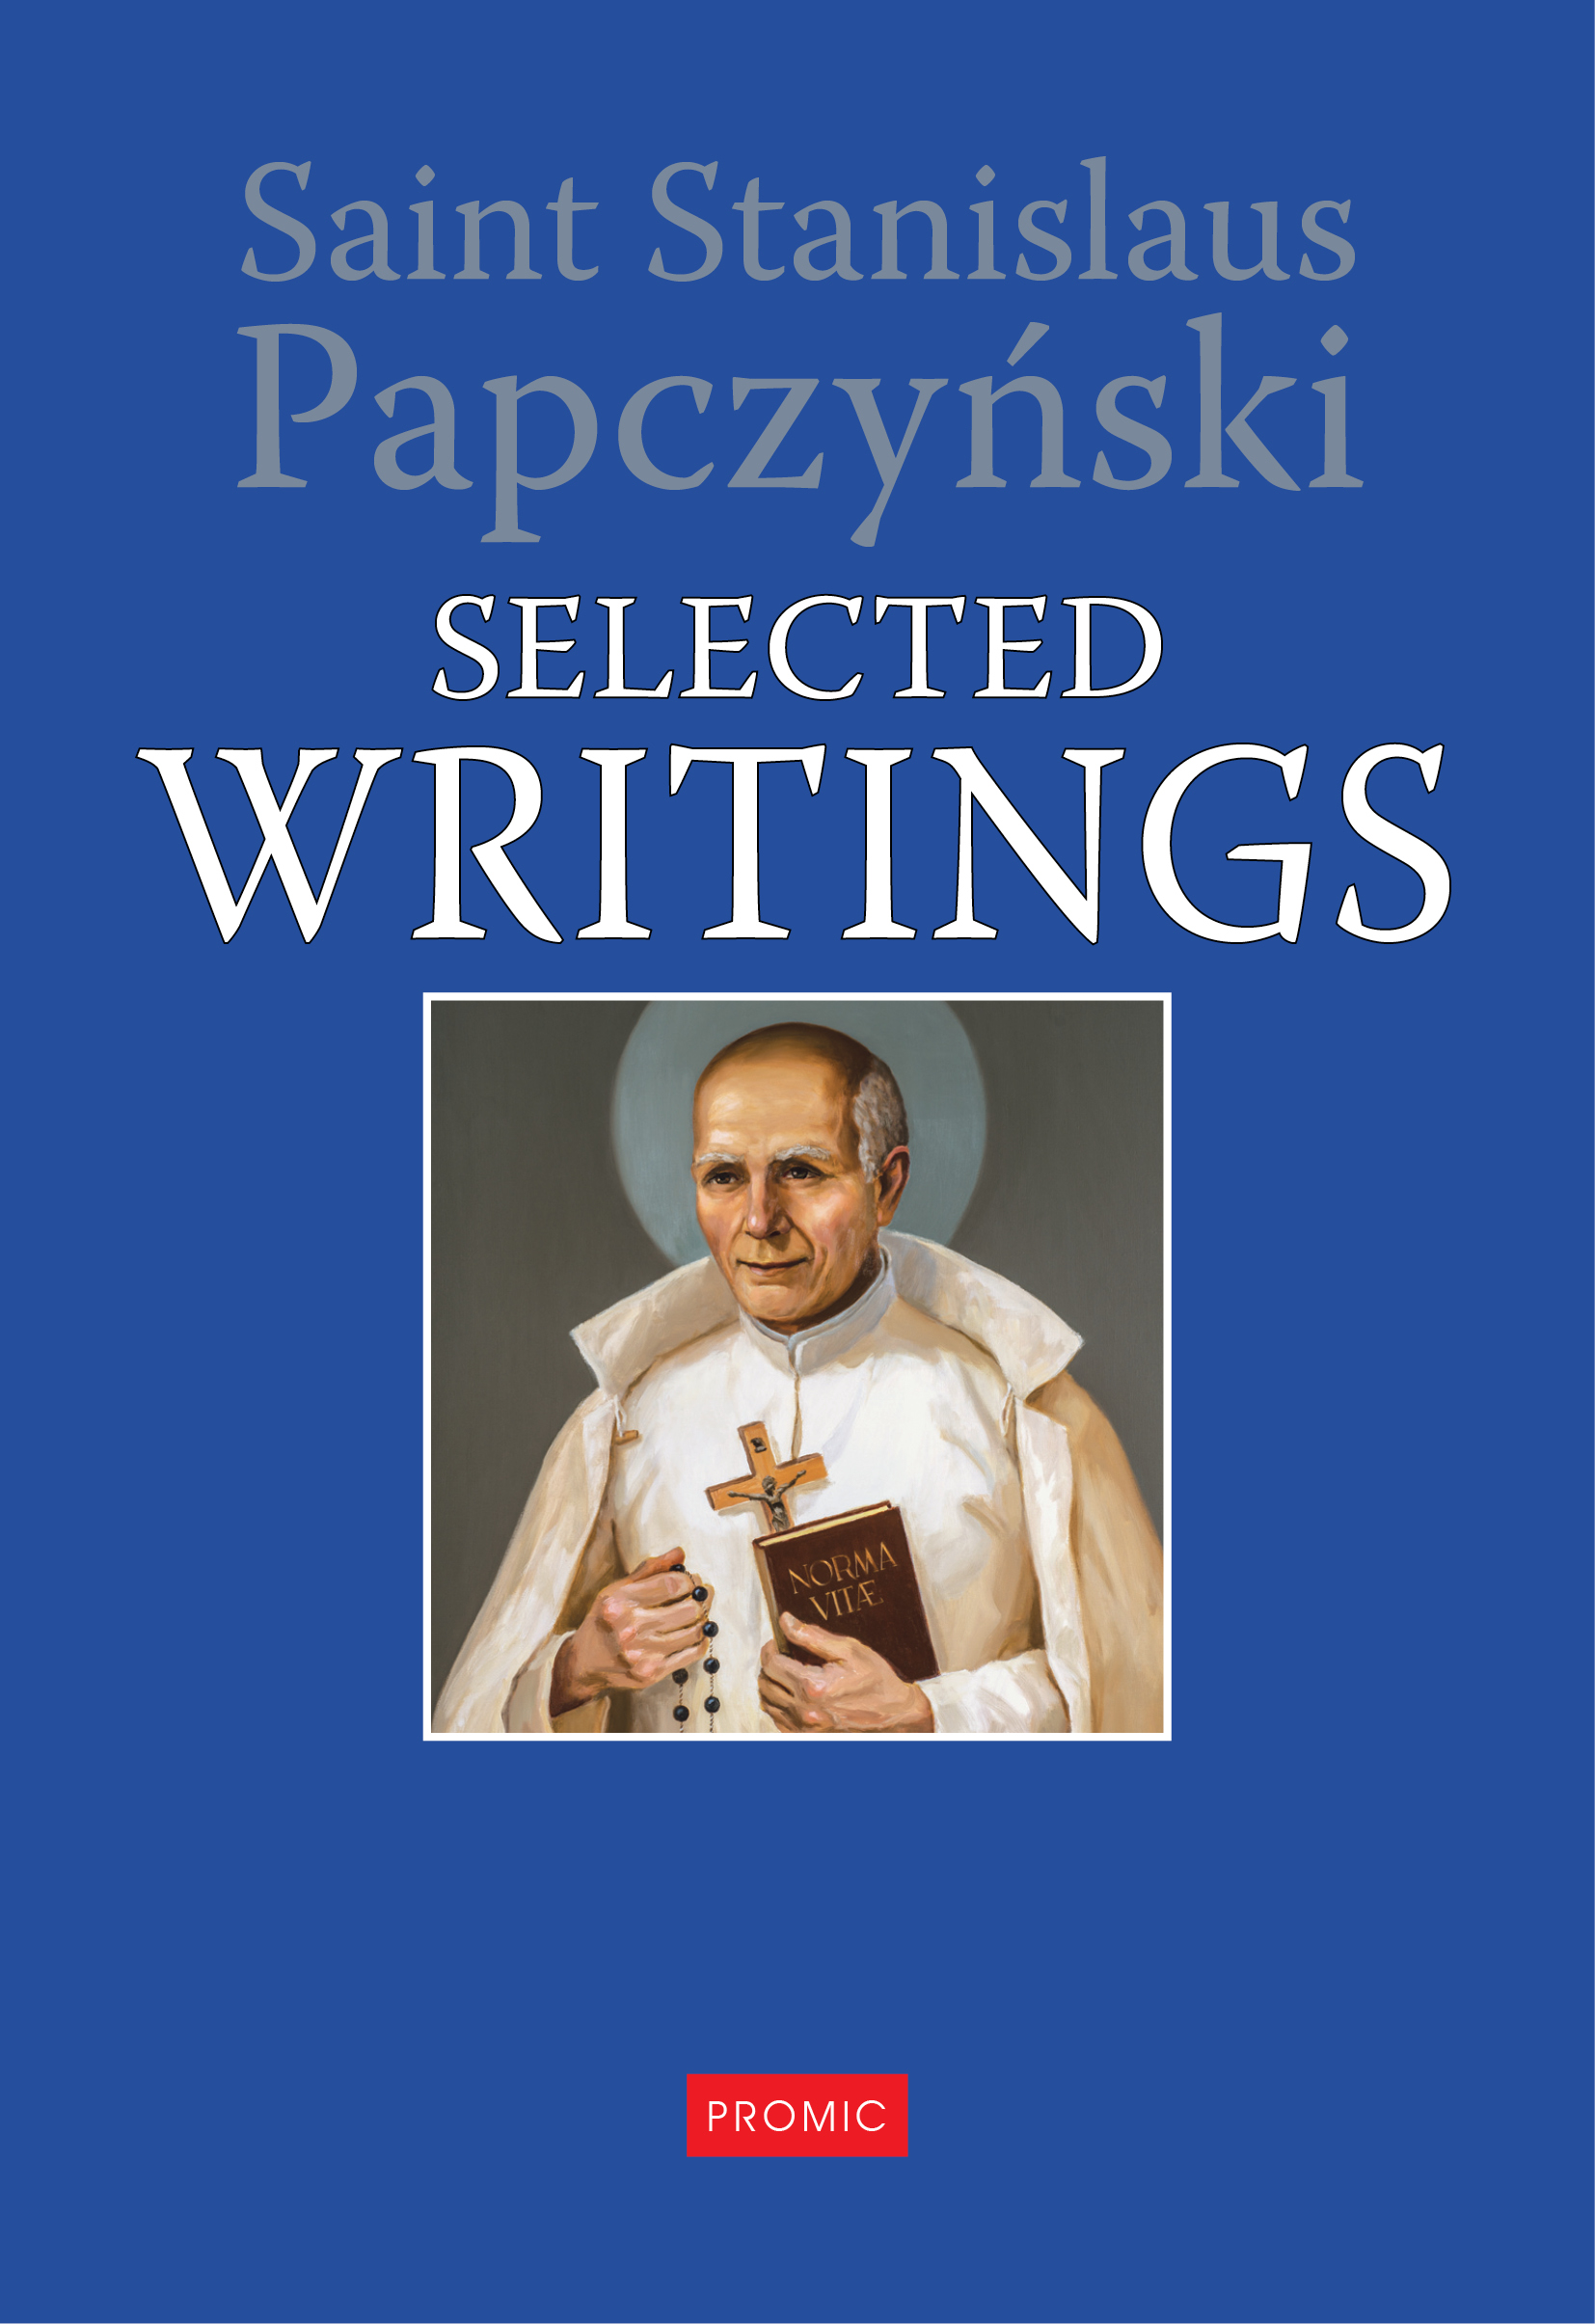 papczynski-cover-english